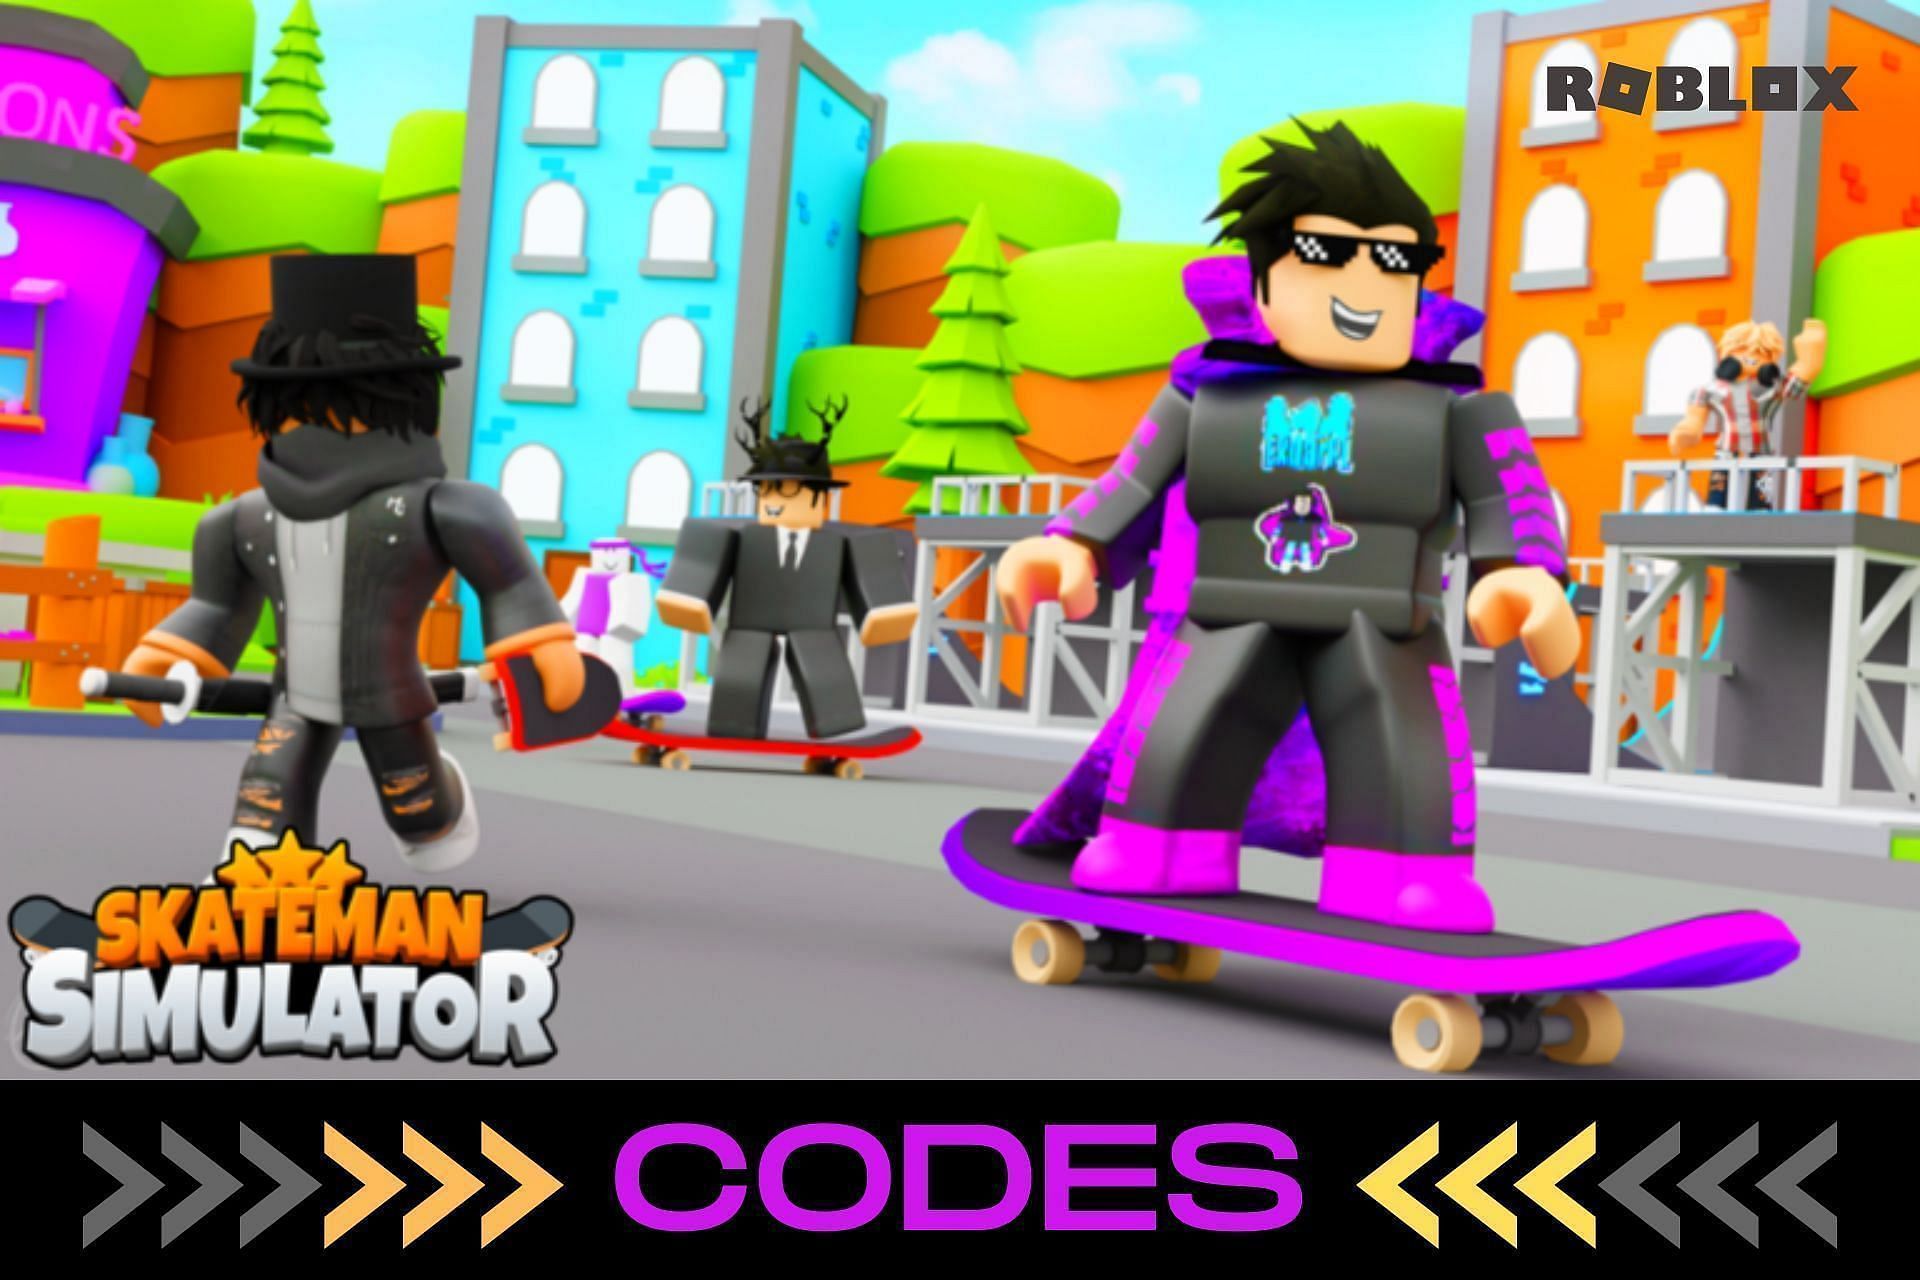 Skateman Simulator codes (Image via Sportskeeda)